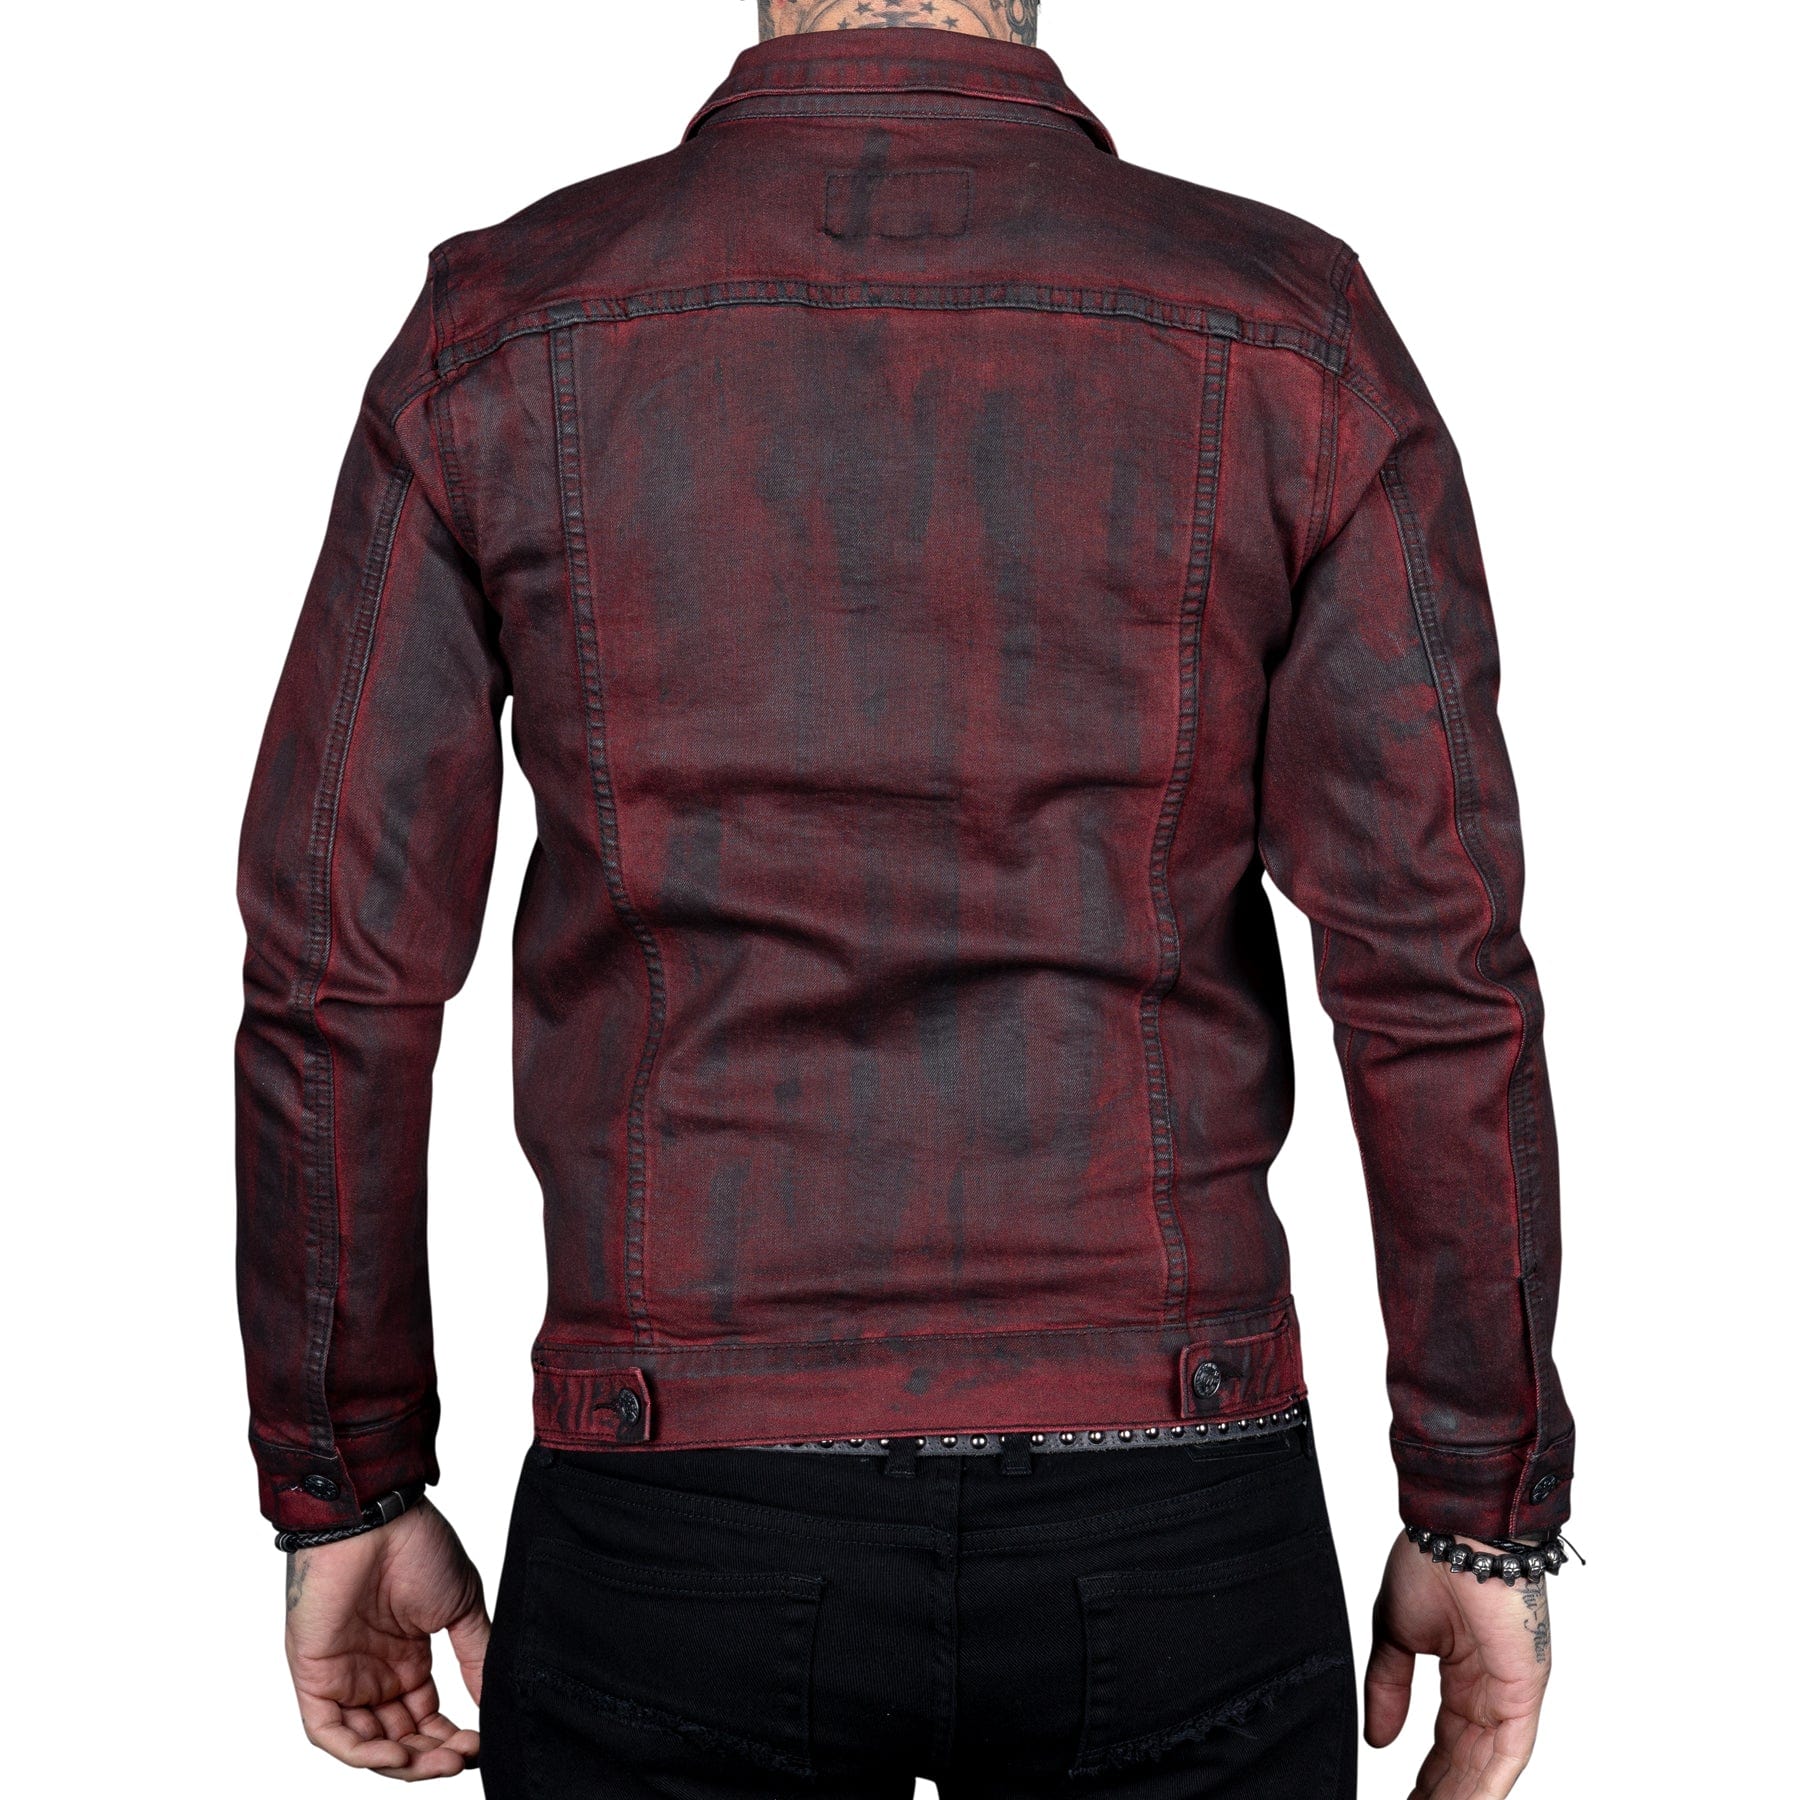 All Access Collection Jacket Idolmaker Coated Denim Jacket - Crimson